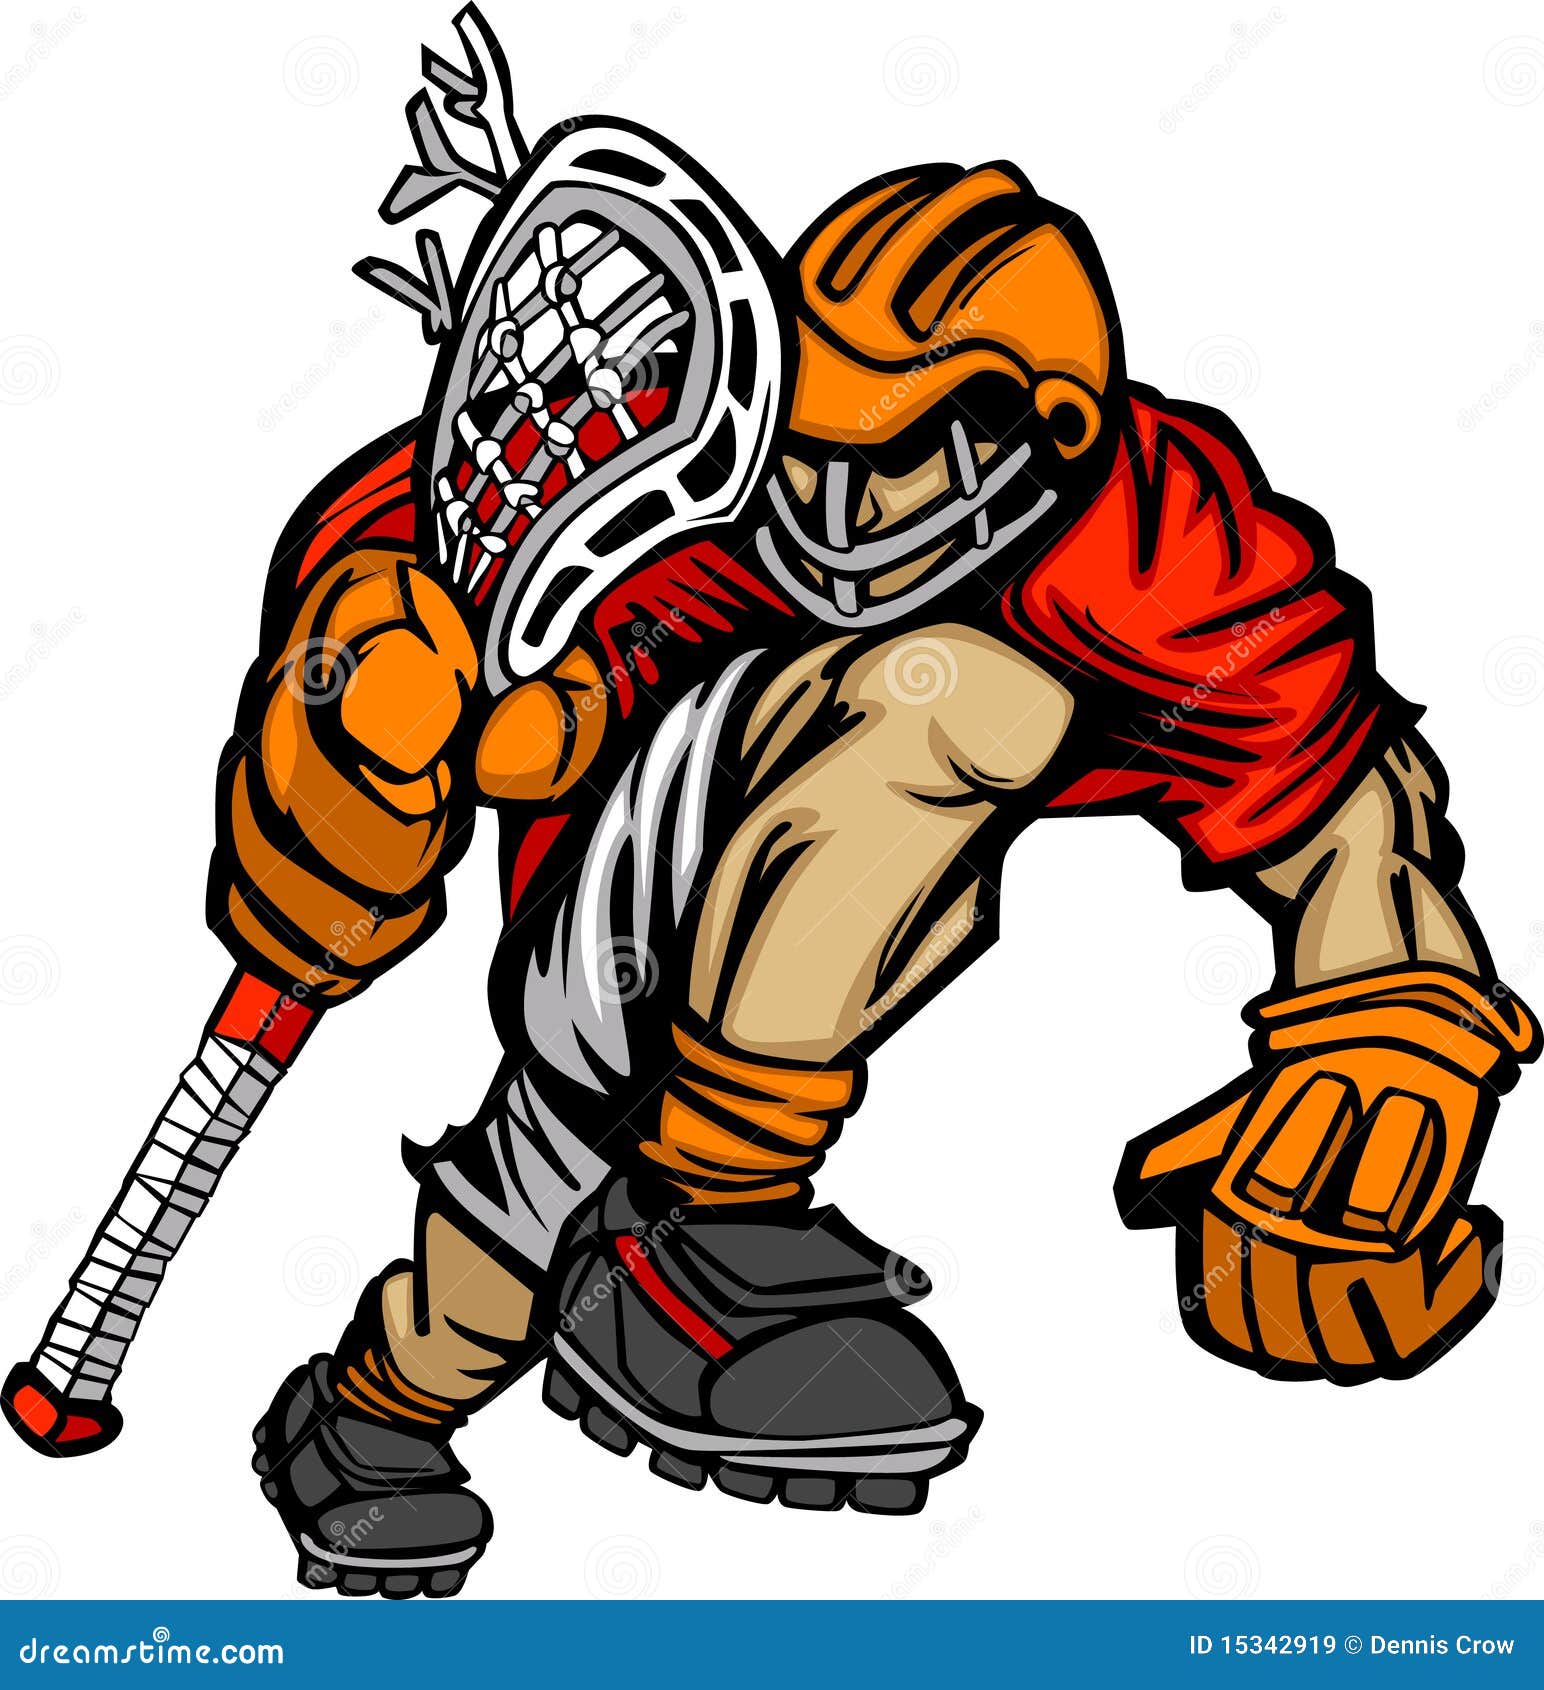 Lacrosse Player Cartoon stock vector. Illustration of logo - 15342919